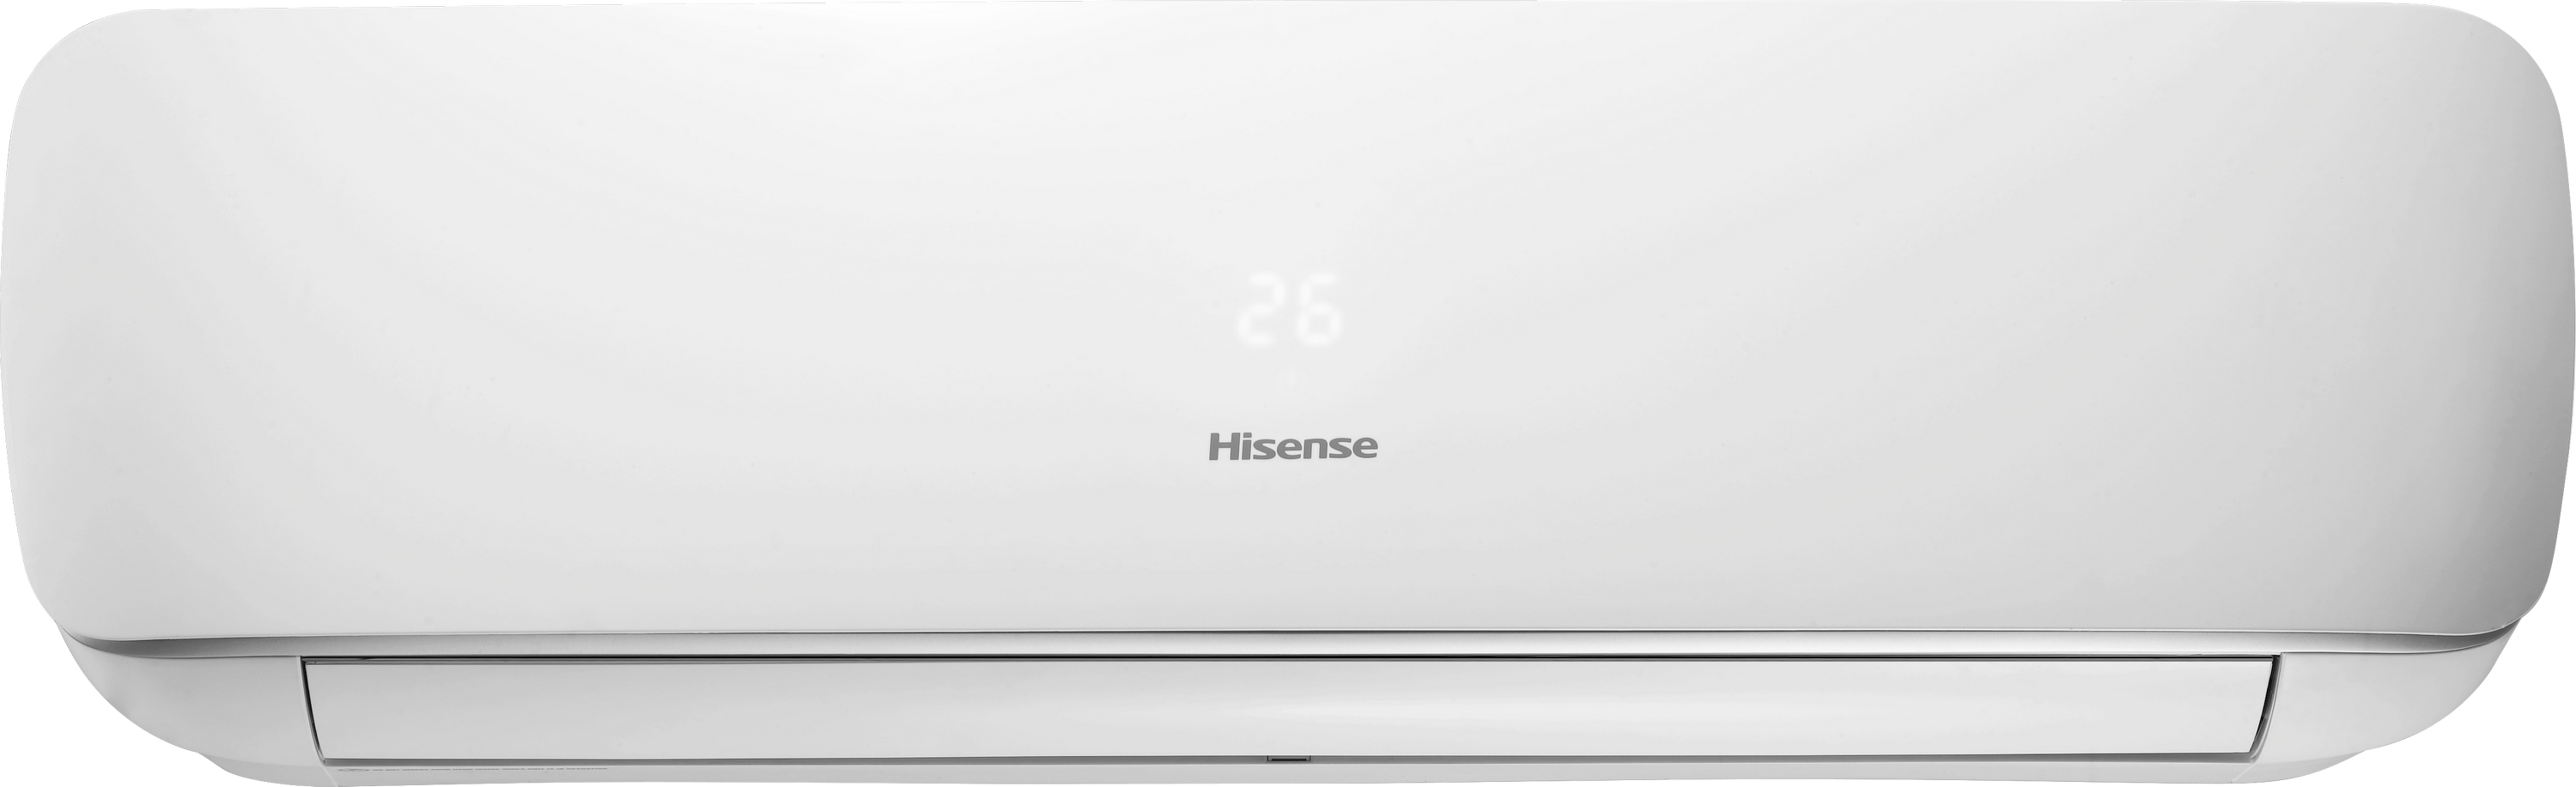 Кондиционер сплит-система Hisense Apple Pie AST-12UW4SVETG15 цена 0.00 грн - фотография 2